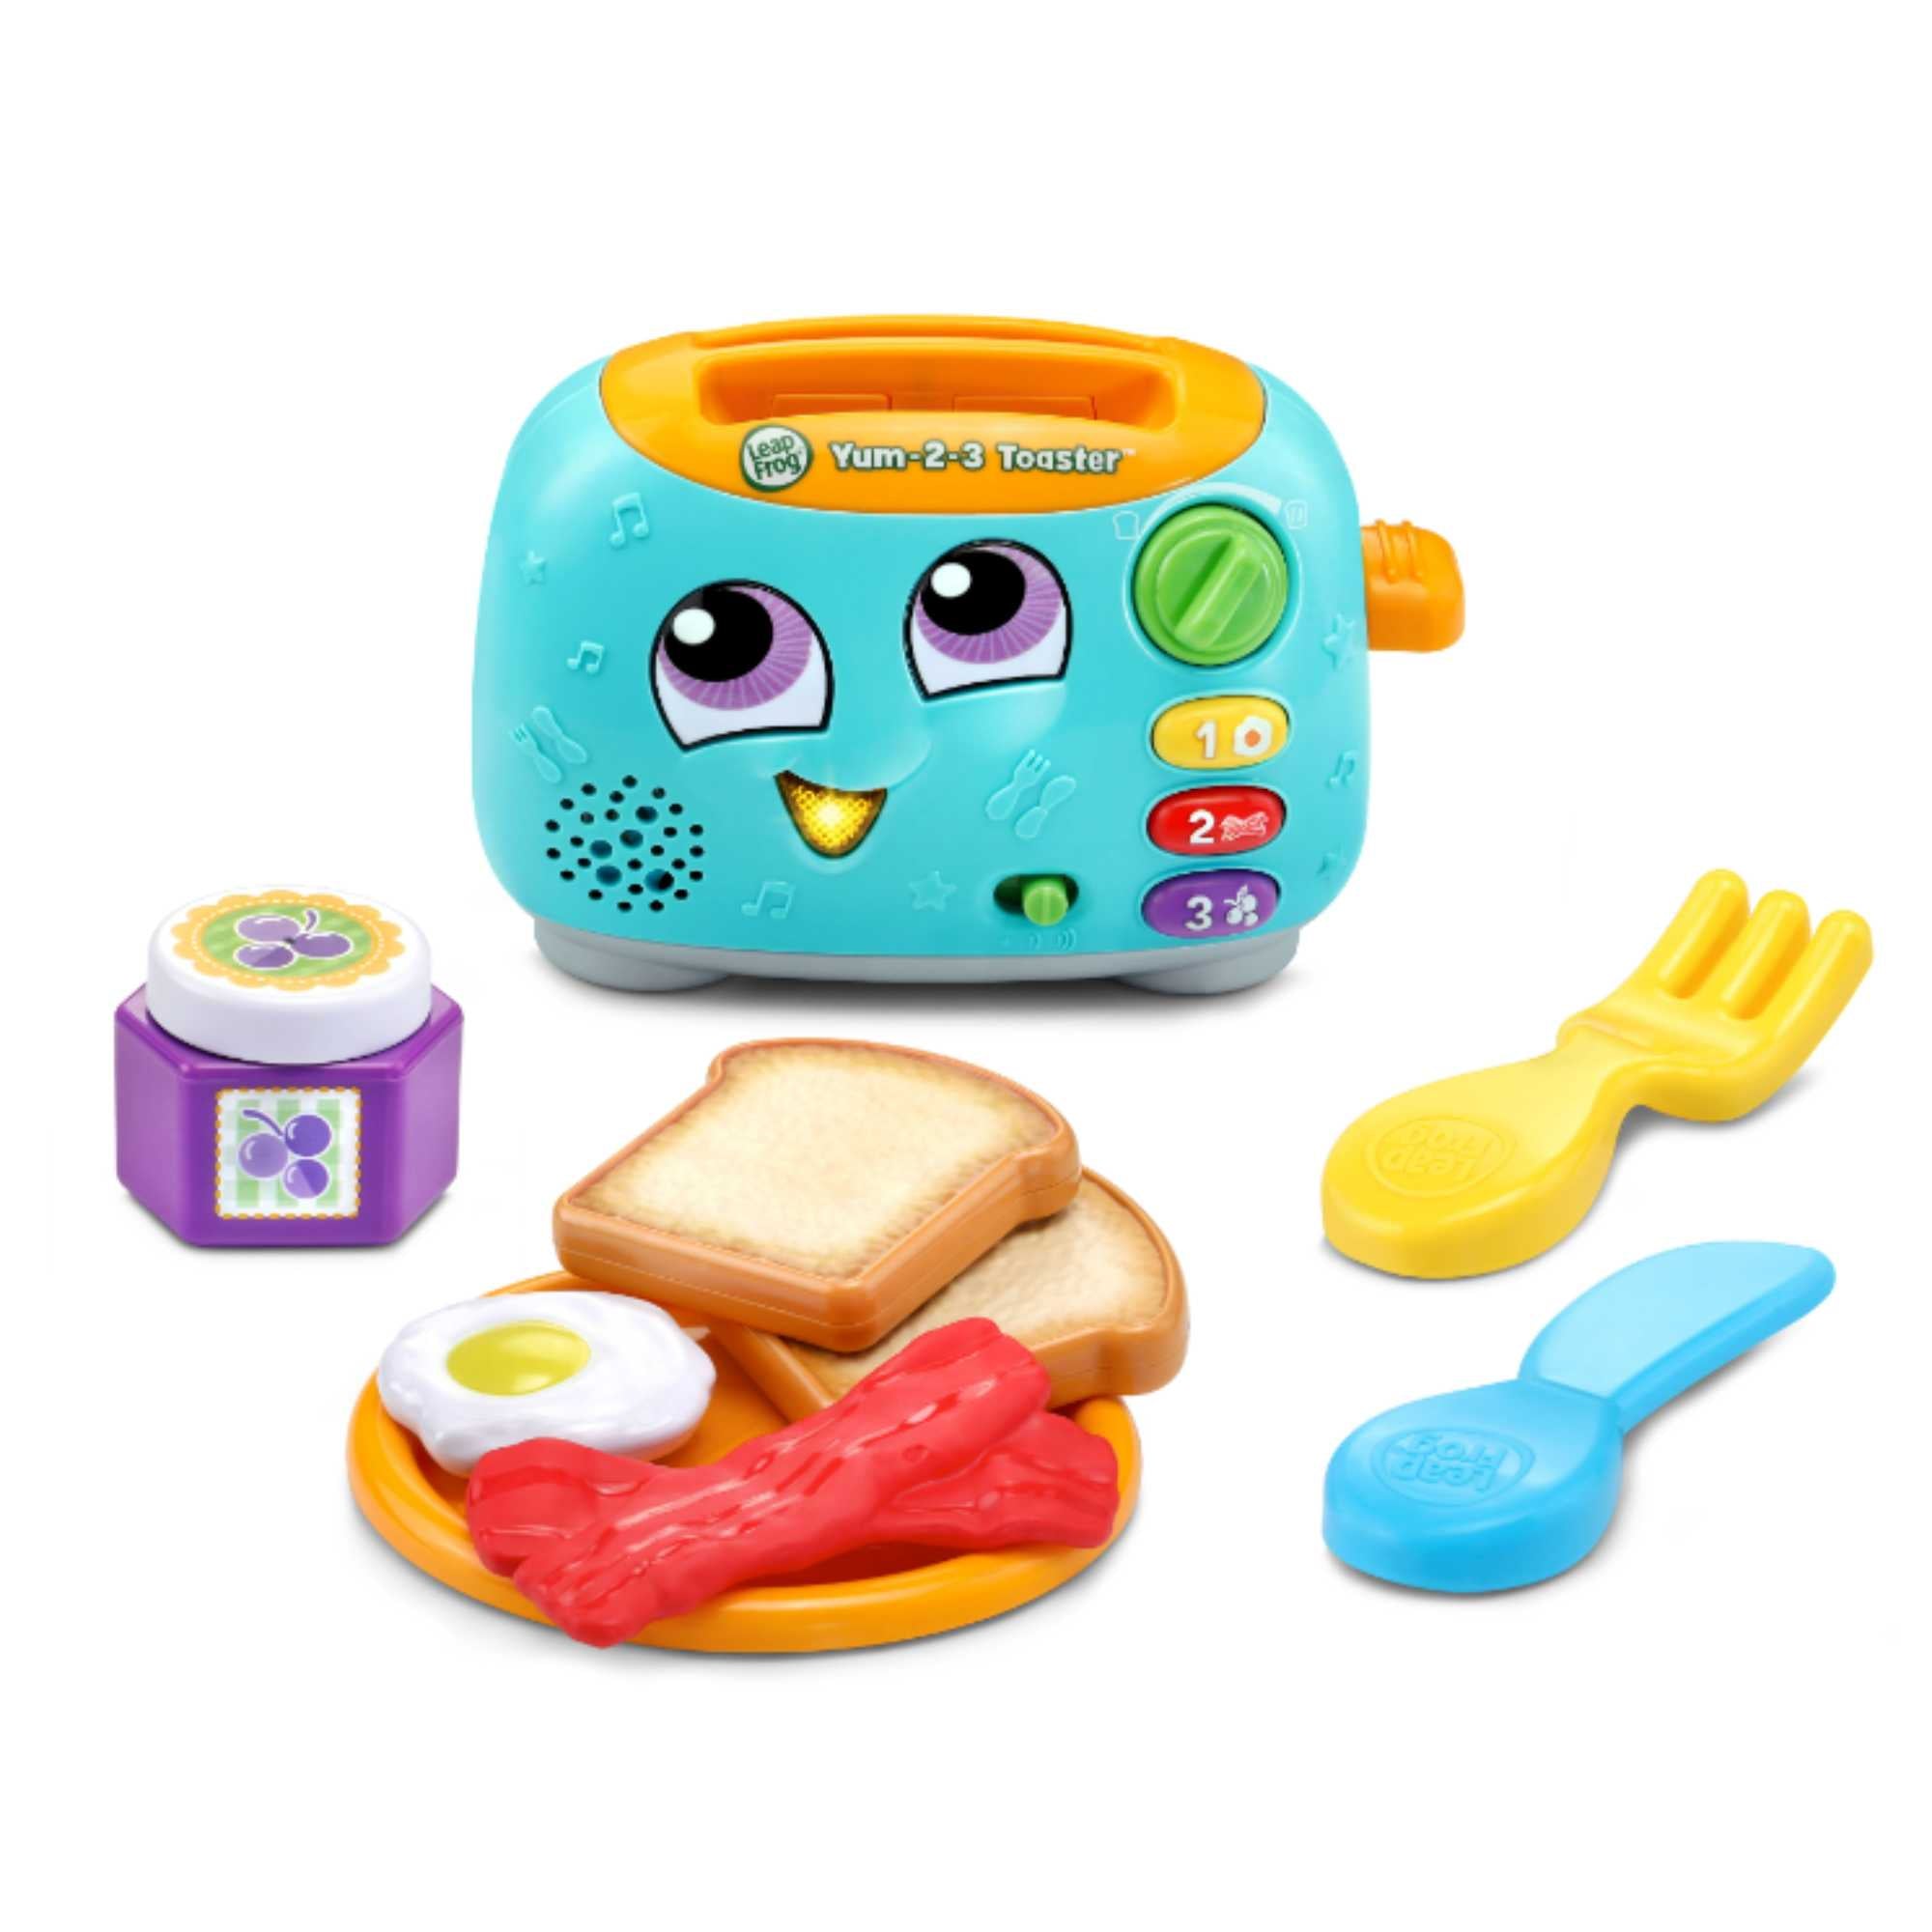 LeapFrog Yum 2-3 Toaster Toy Playset